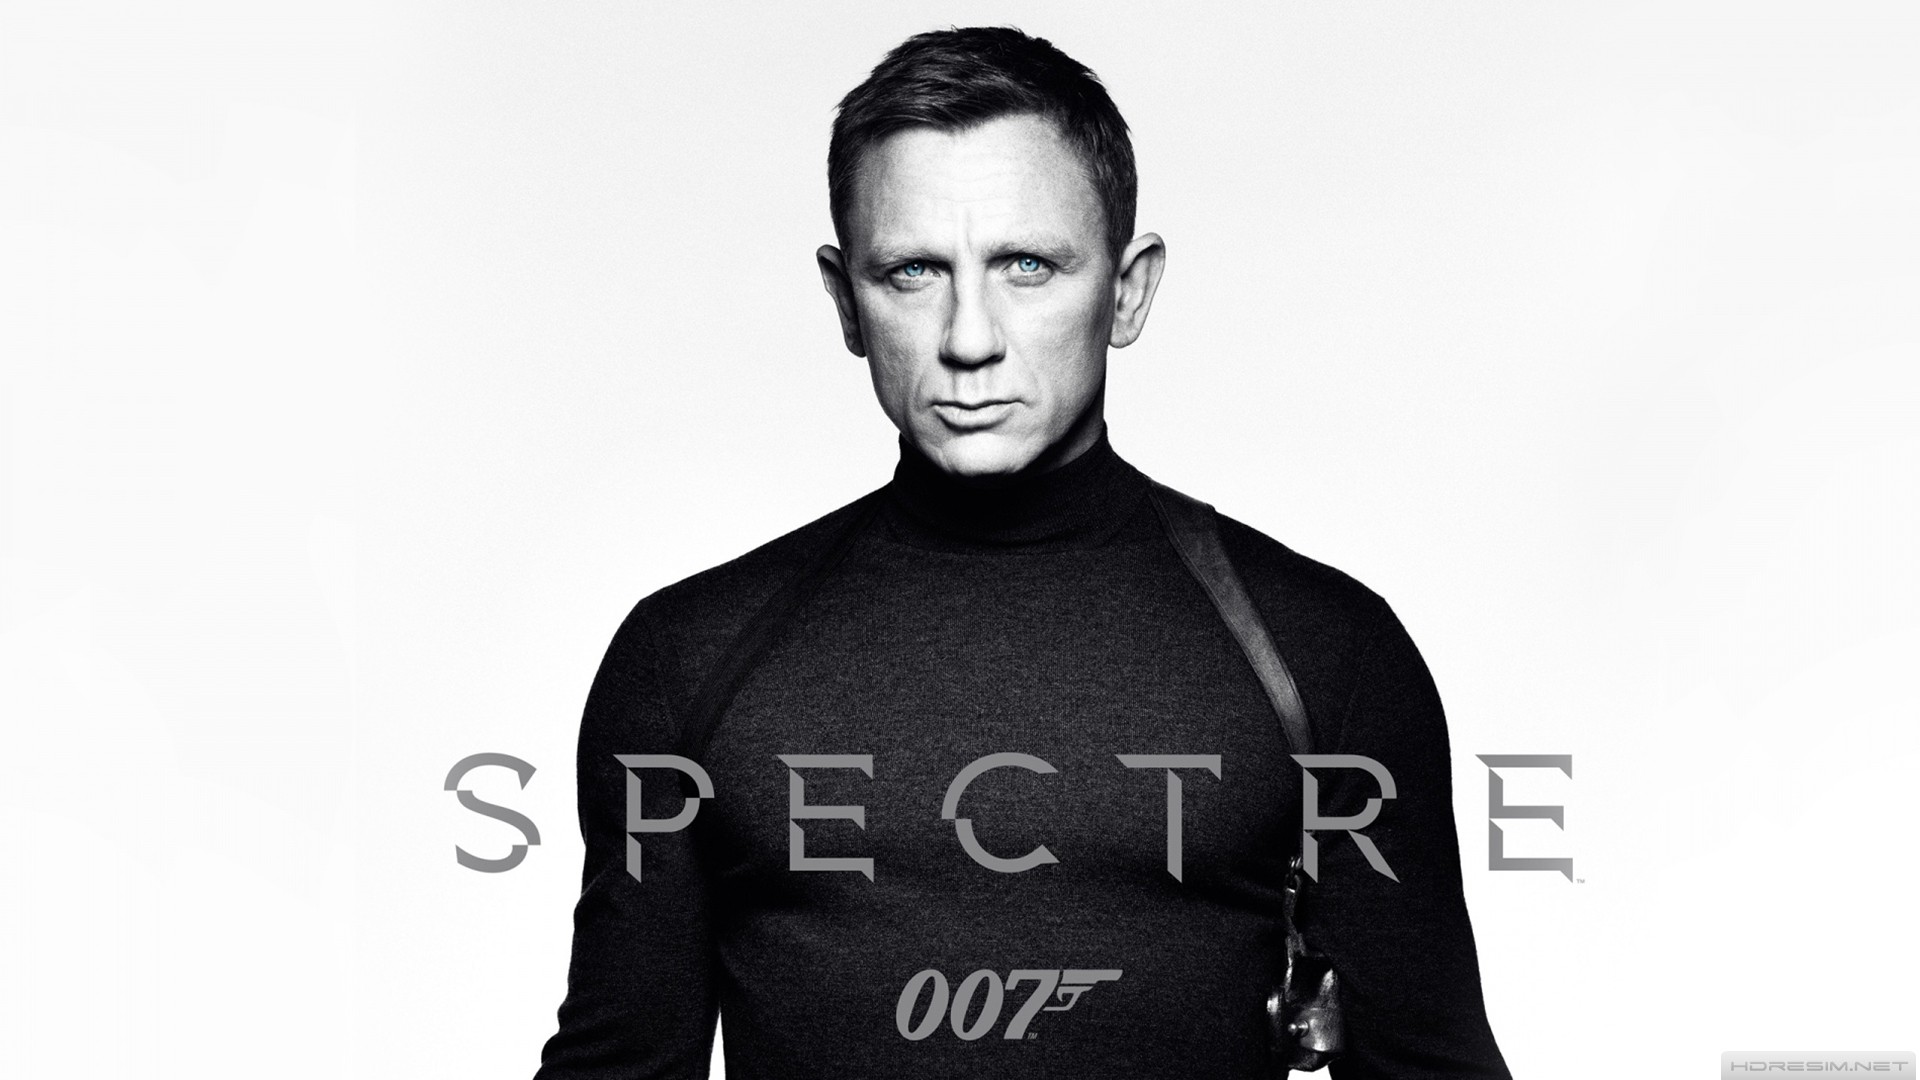 james bond,007,spectre,2015,film